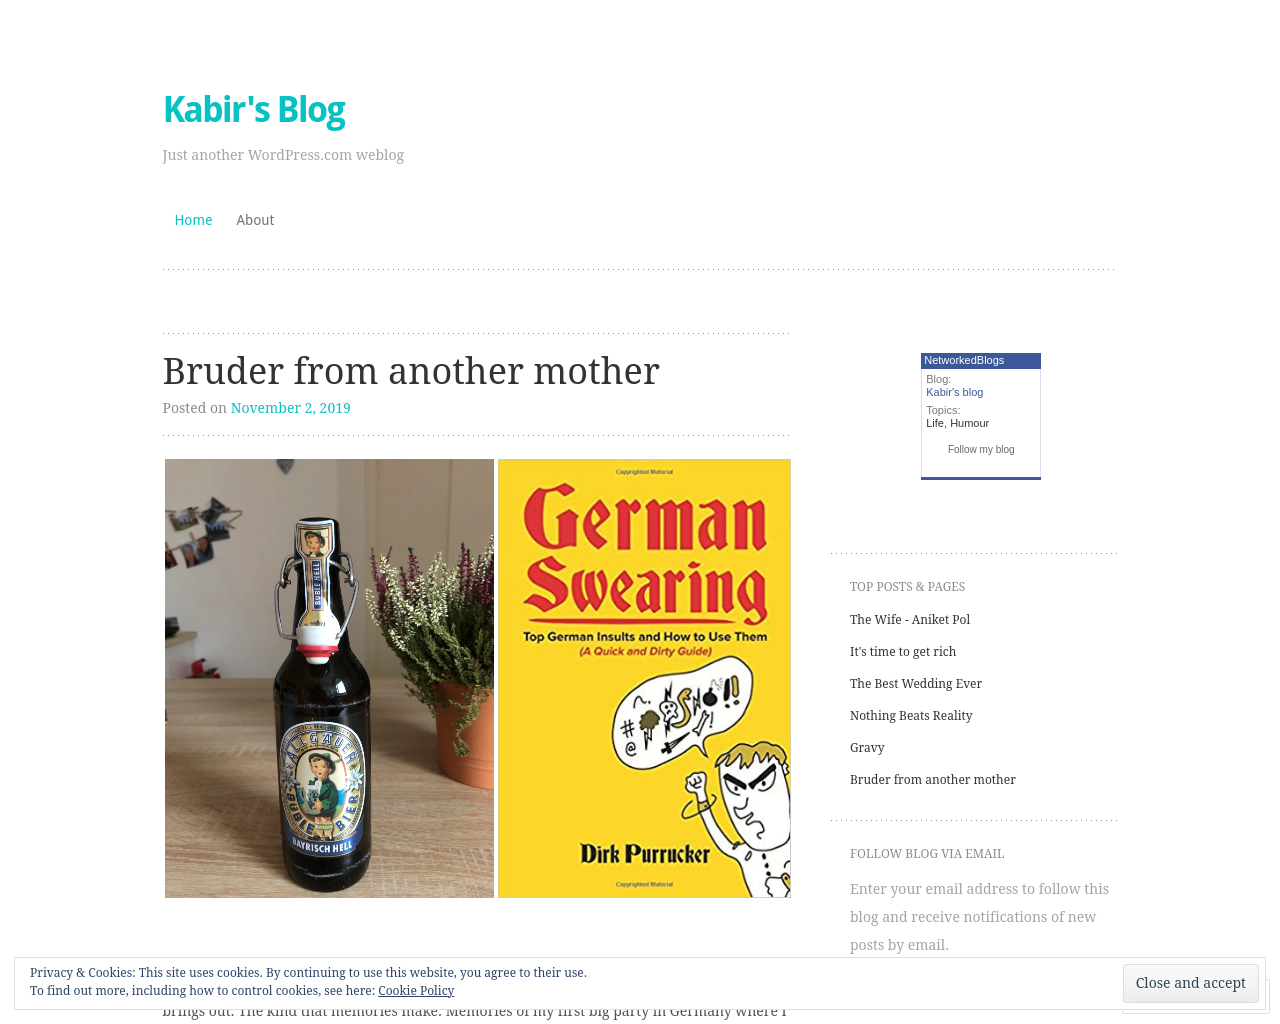 Kabir's blog